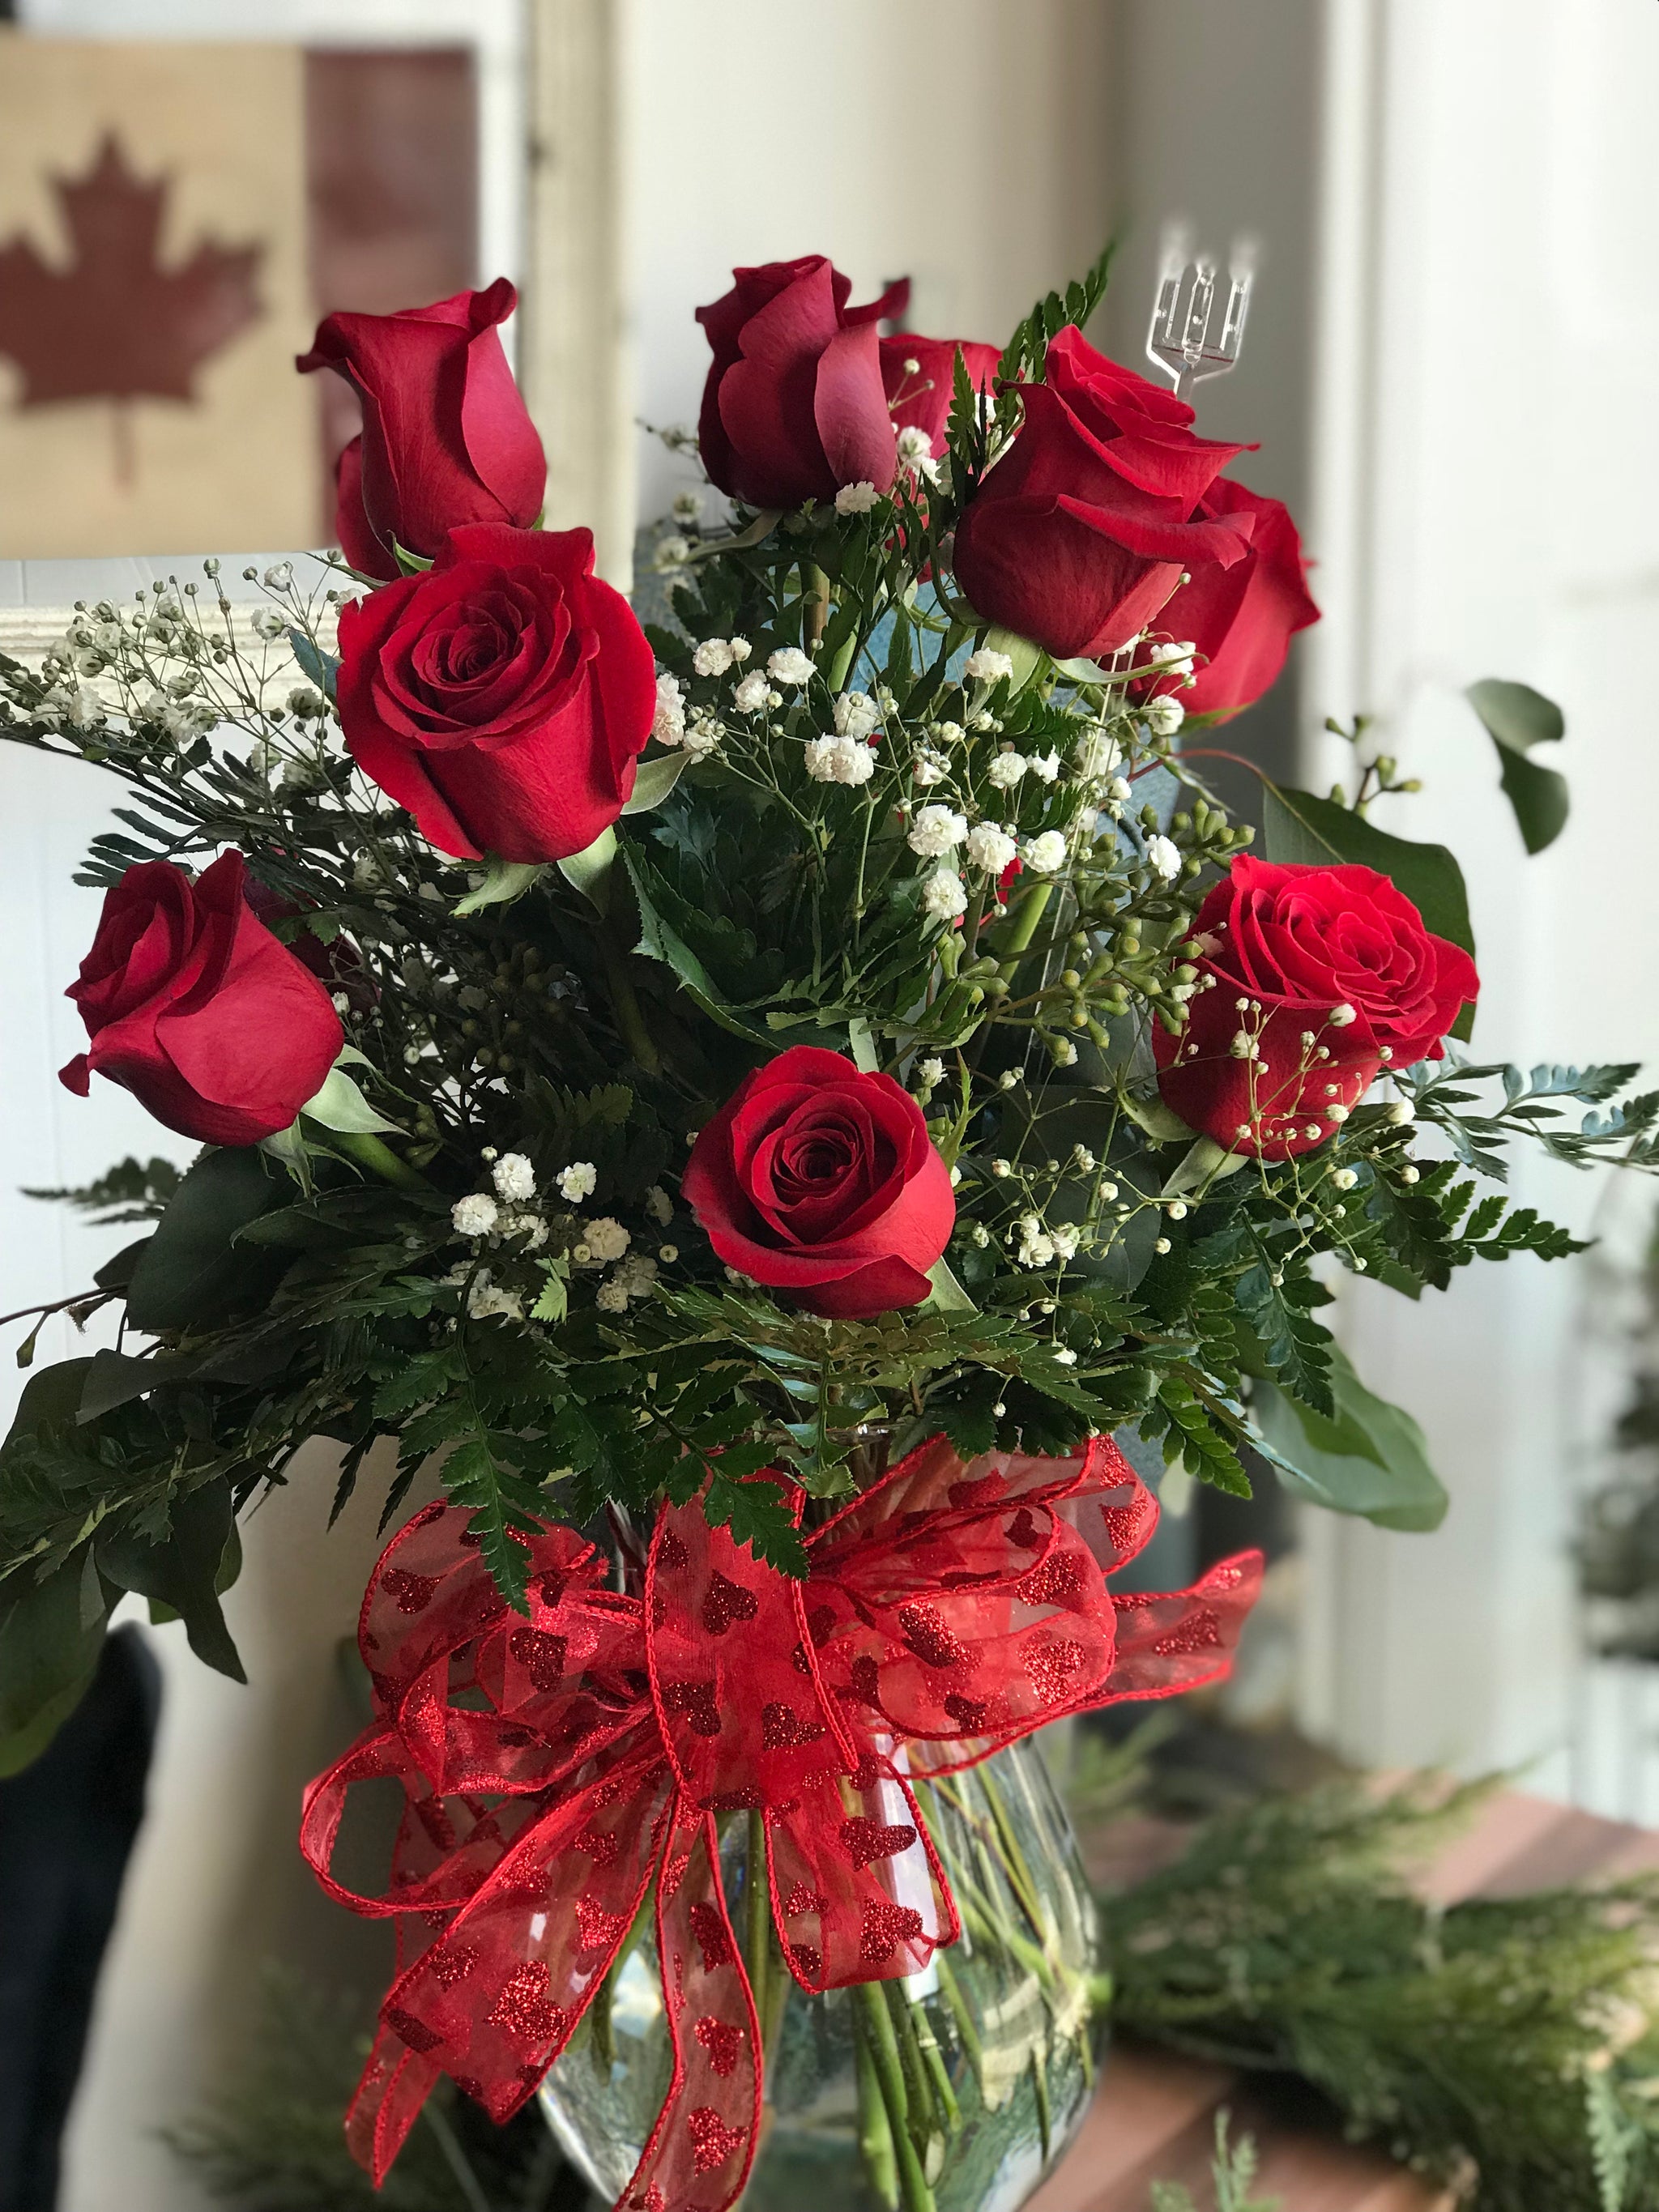 Fresh Roses - Arranged in a Vase